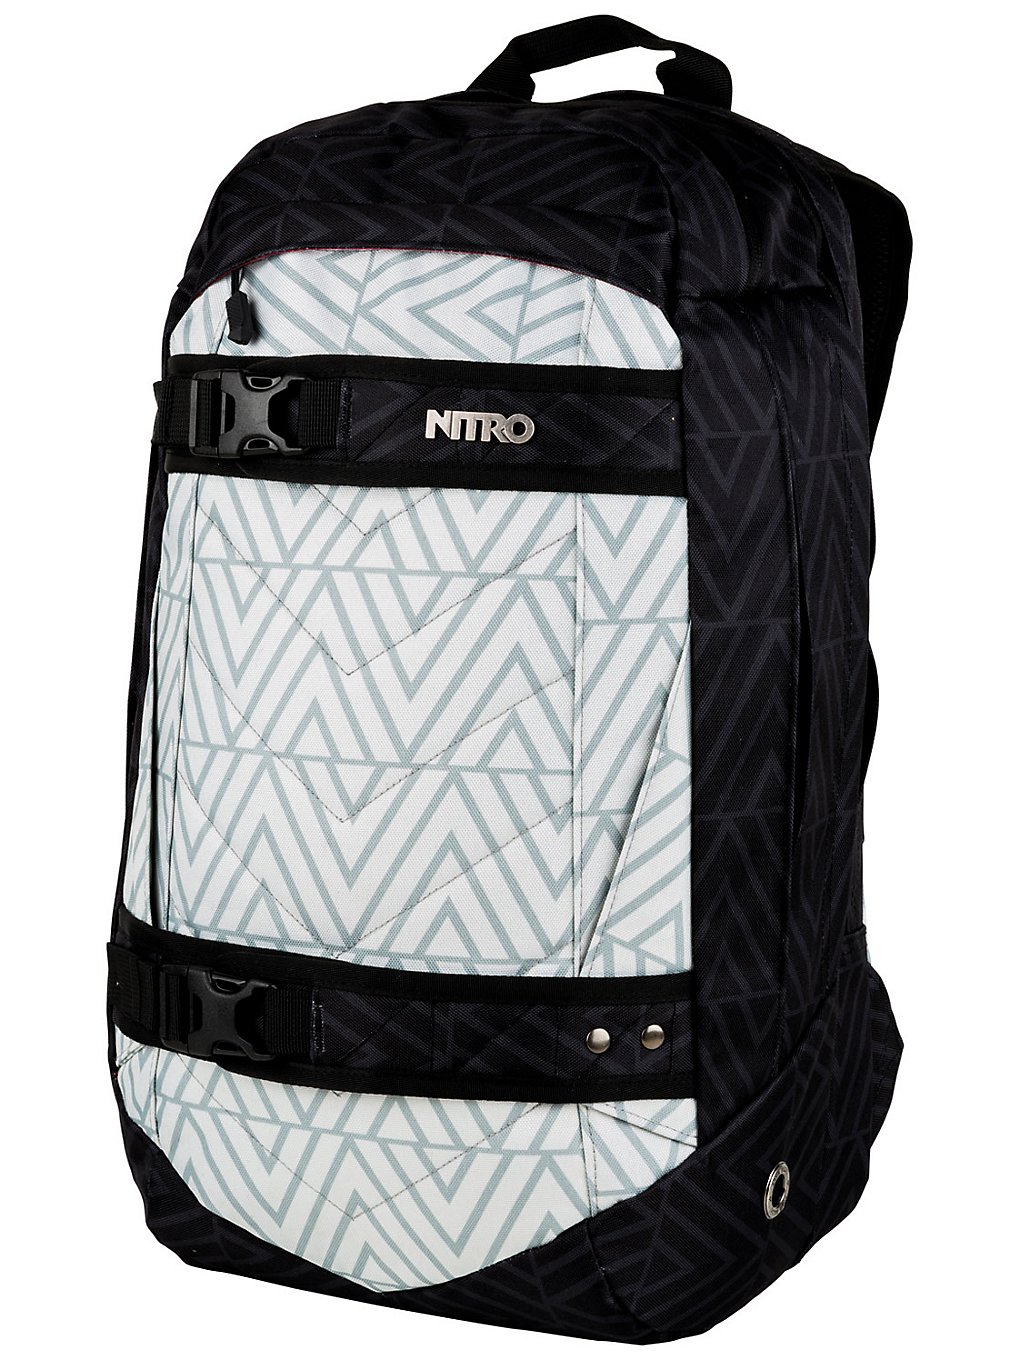 Nitro aerial backpack musta, nitro